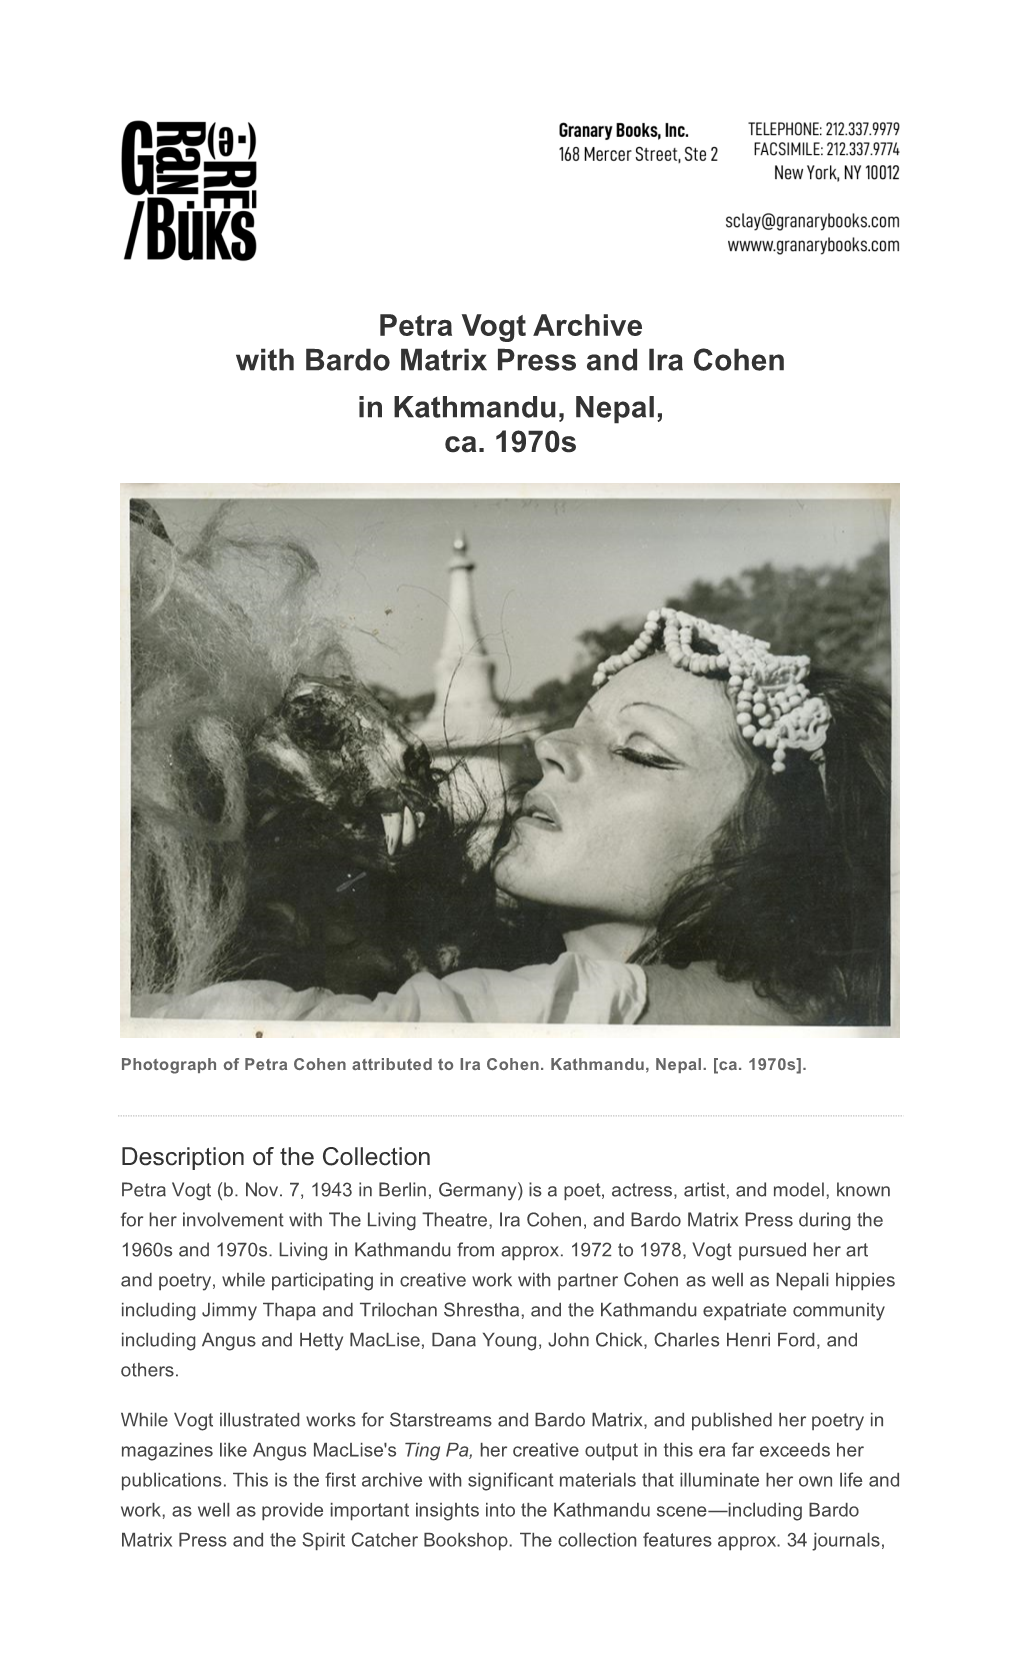 Petra Vogt Archive with Bardo Matrix Press and Ira Cohen in Kathmandu, Nepal, Ca